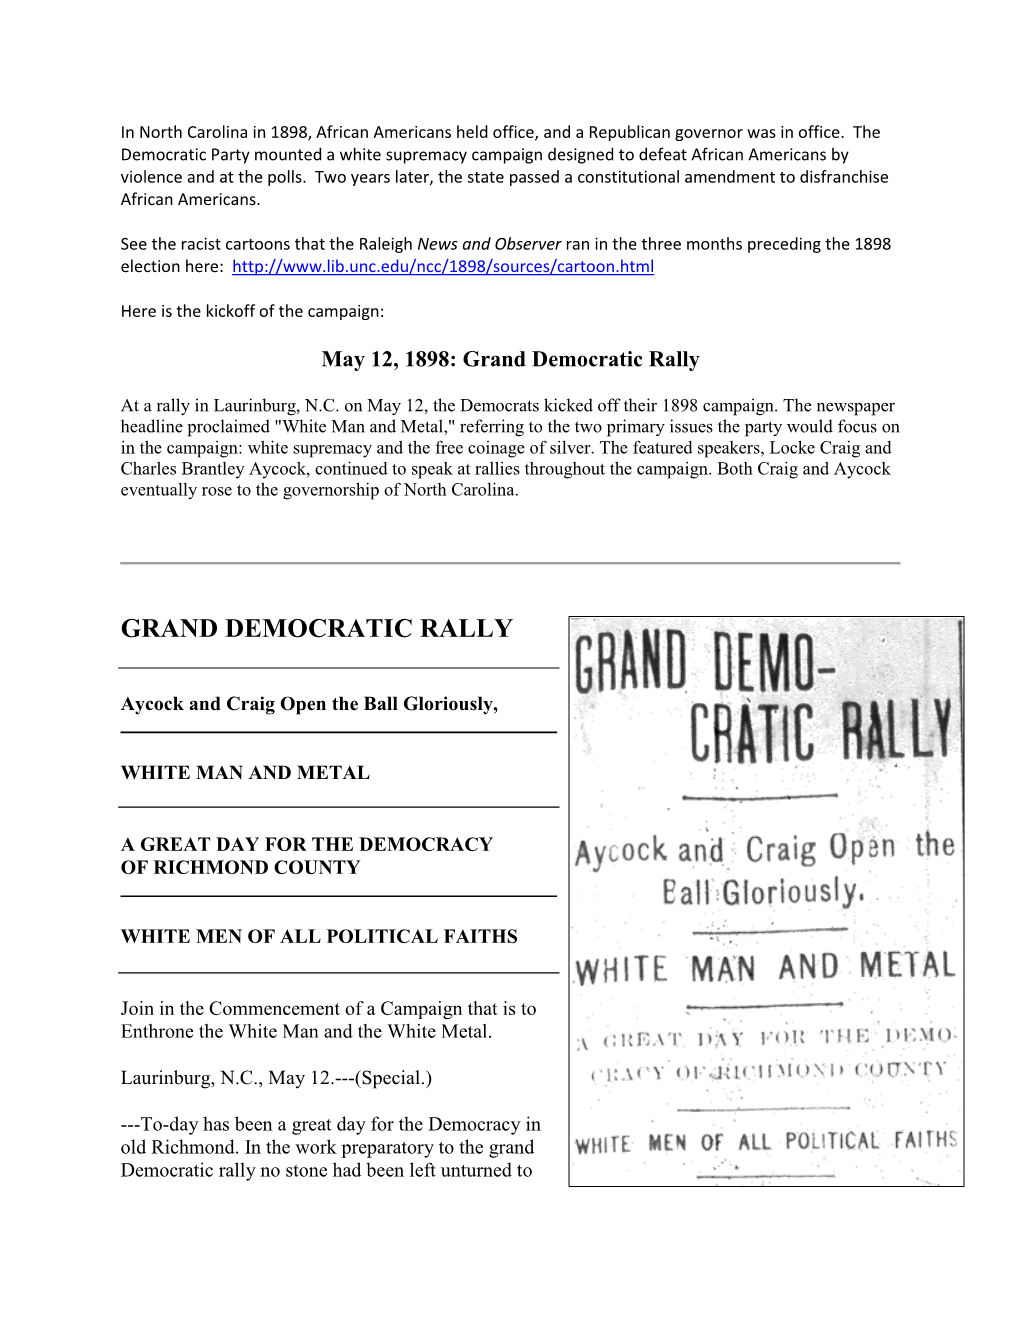 Grand Democratic Rally